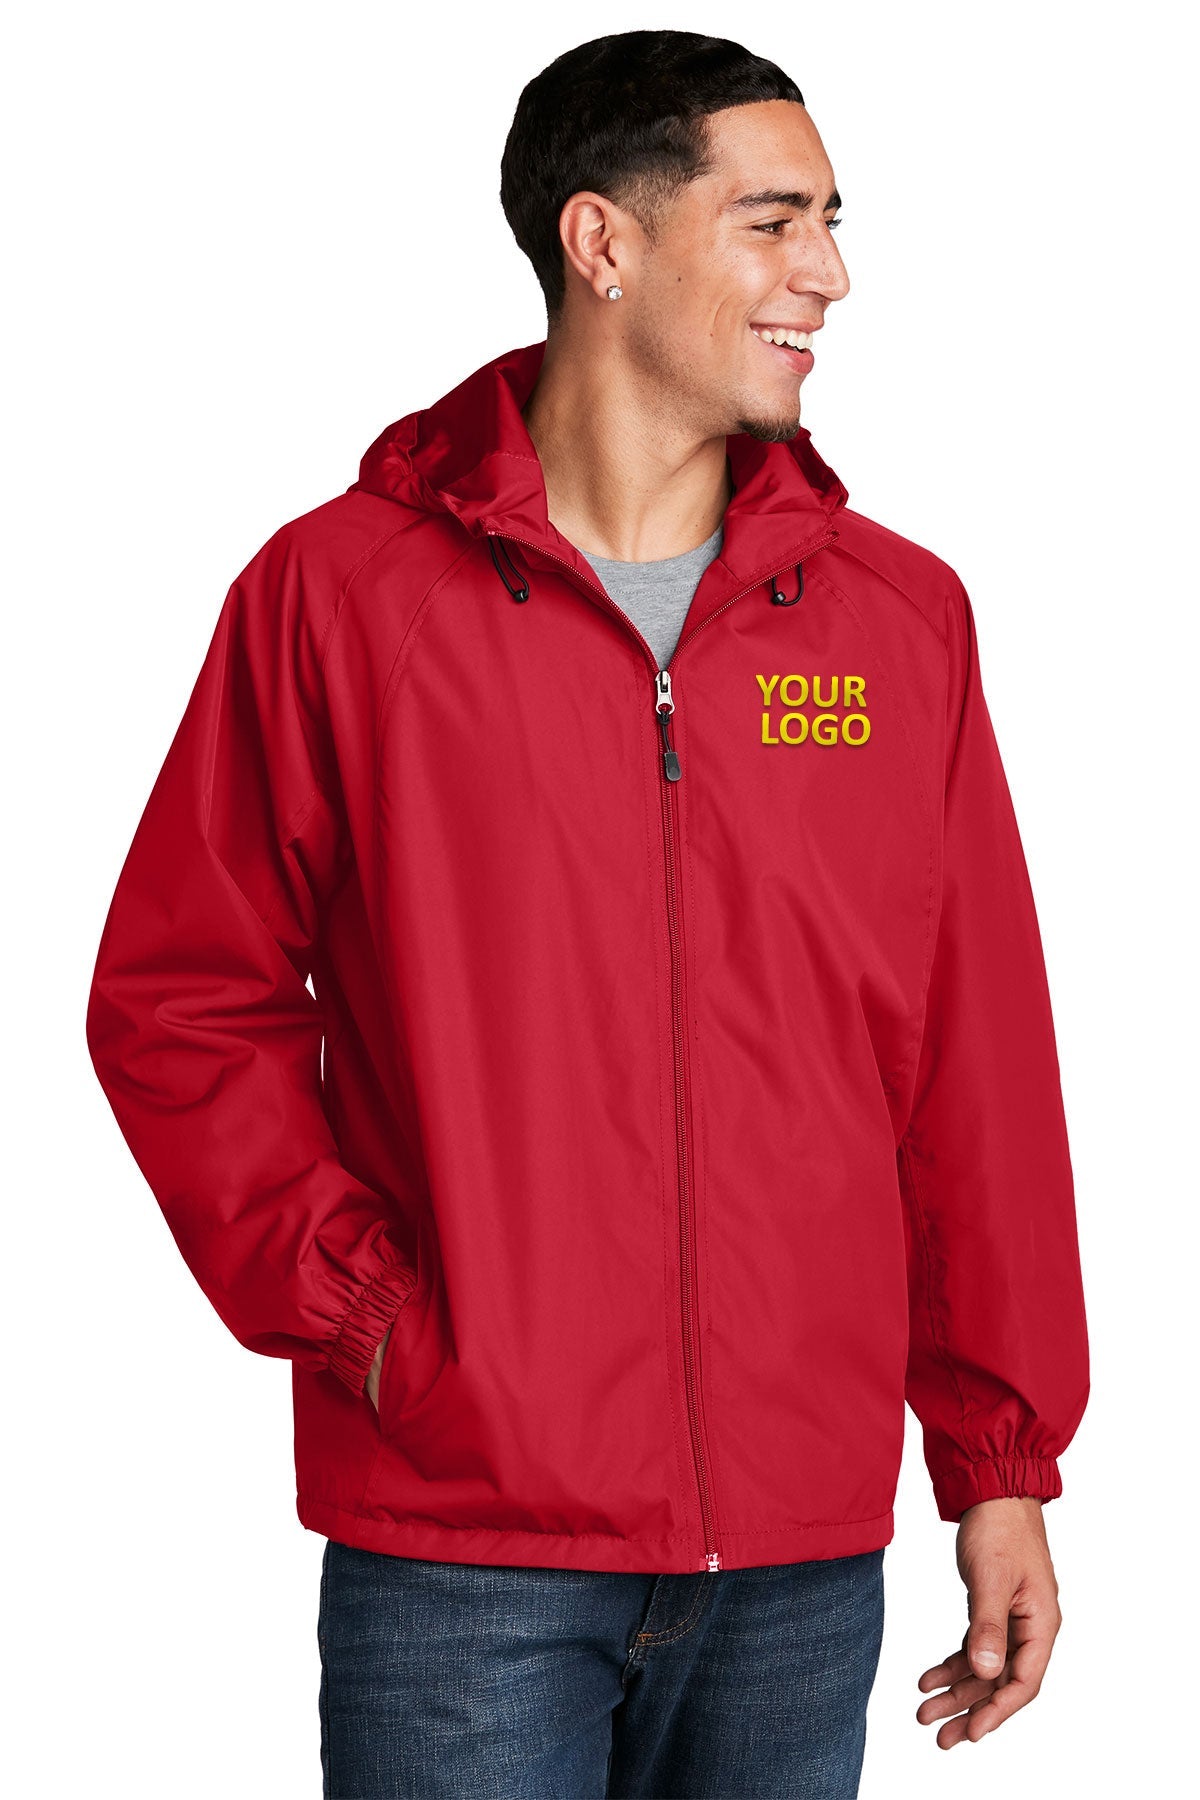 Sport-Tek True Red JST73 business logo jackets